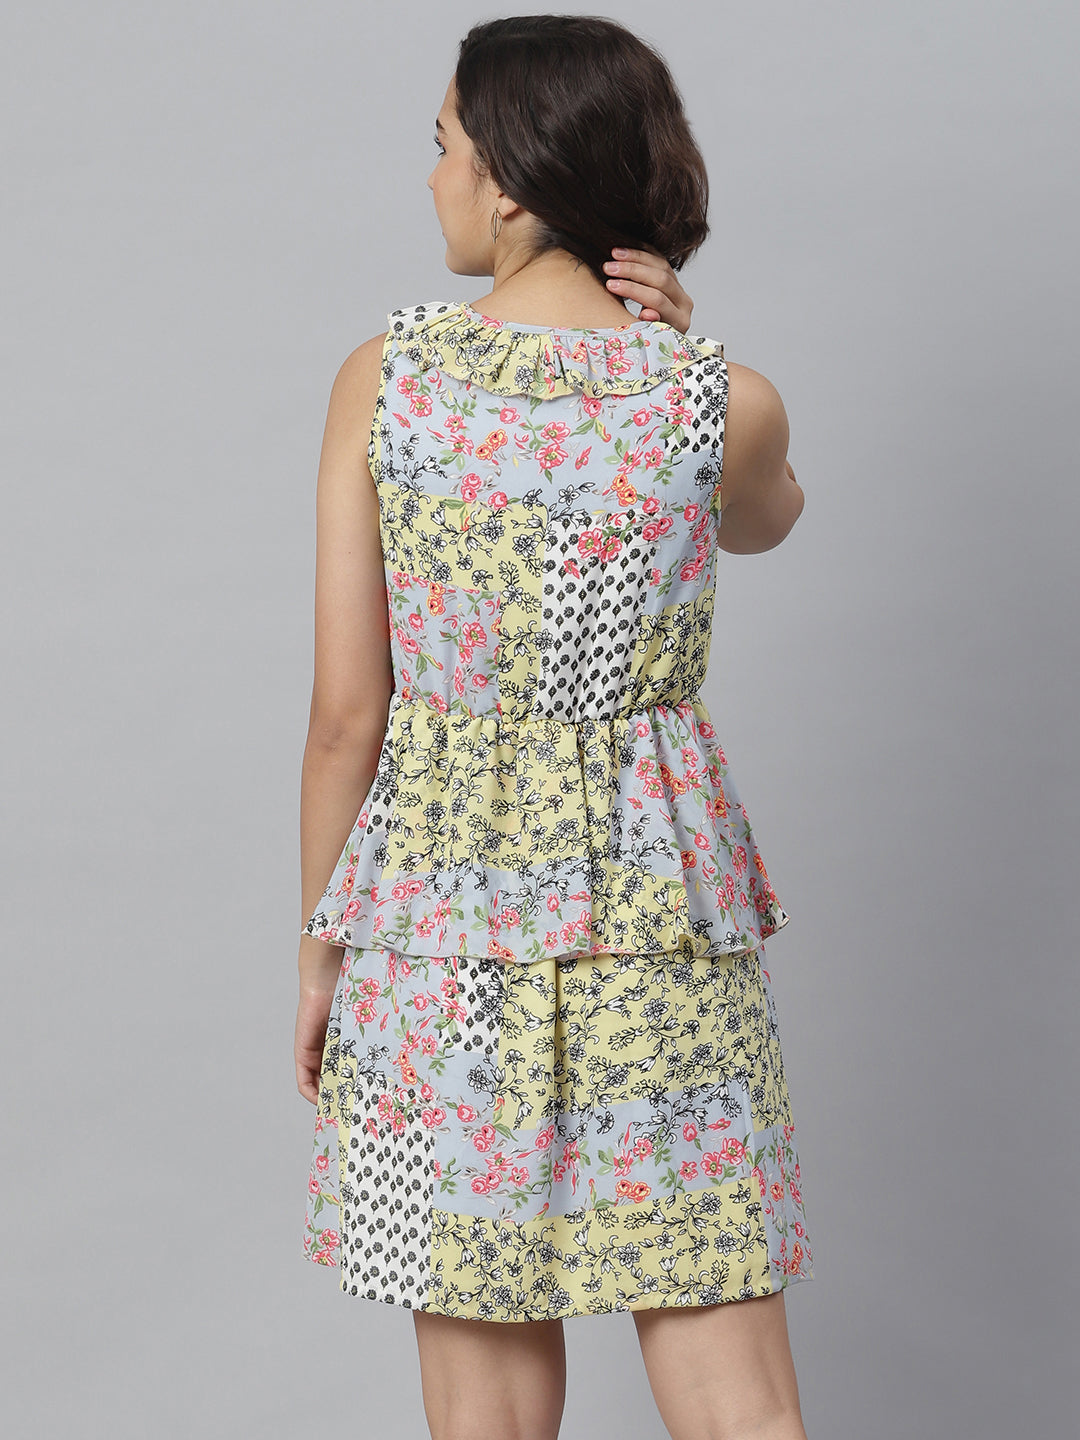 Women's Tile Print Dress with Peplum Detail - StyleStone